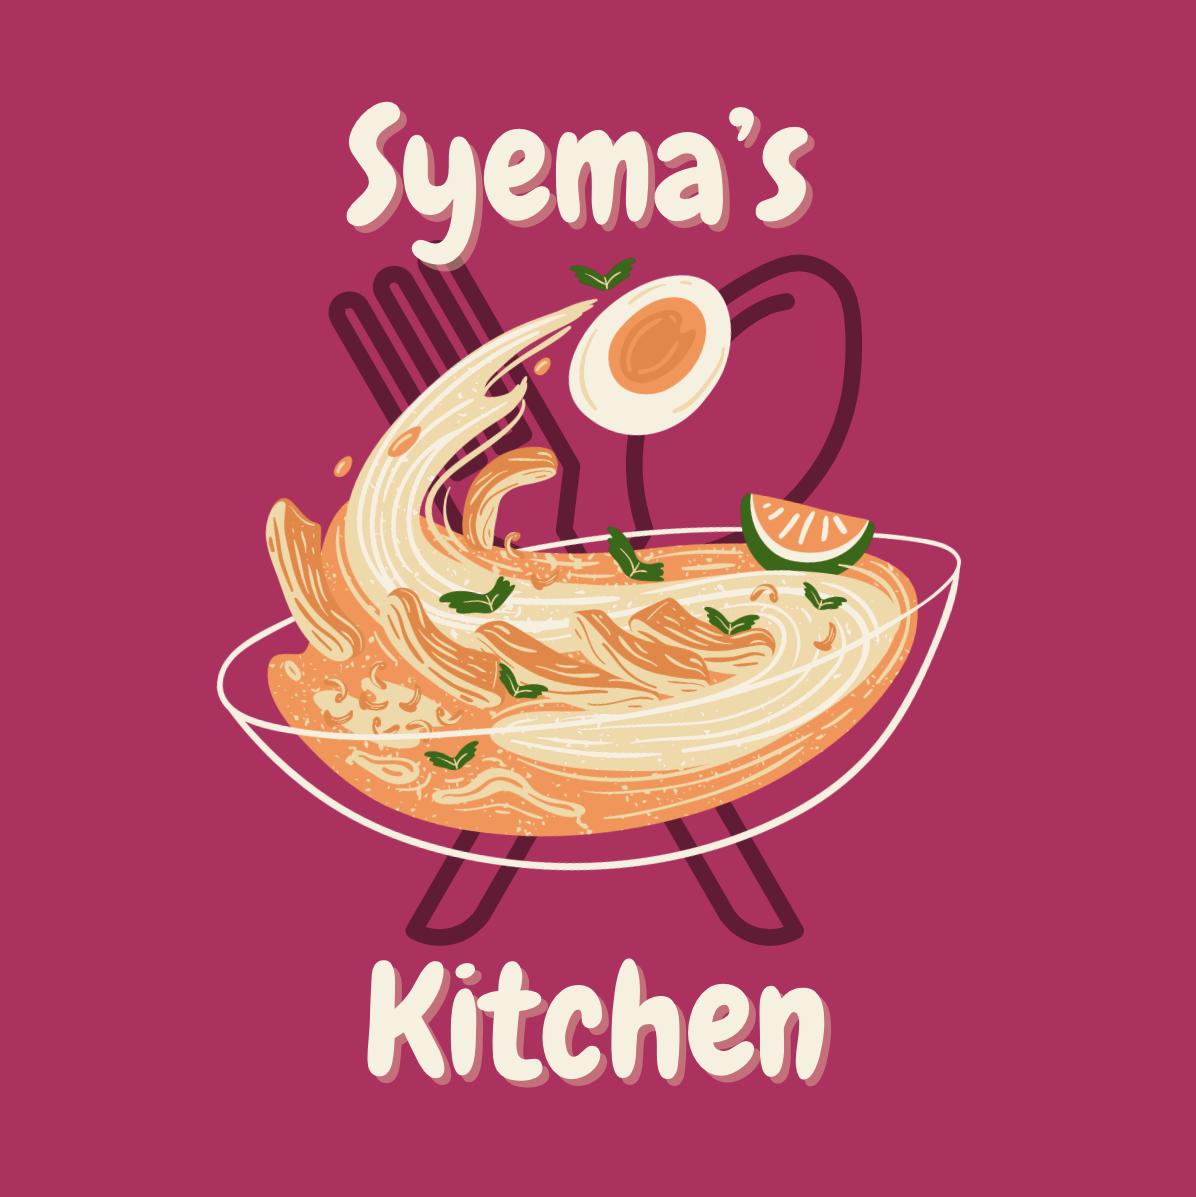 Syema’s Kitchen's images